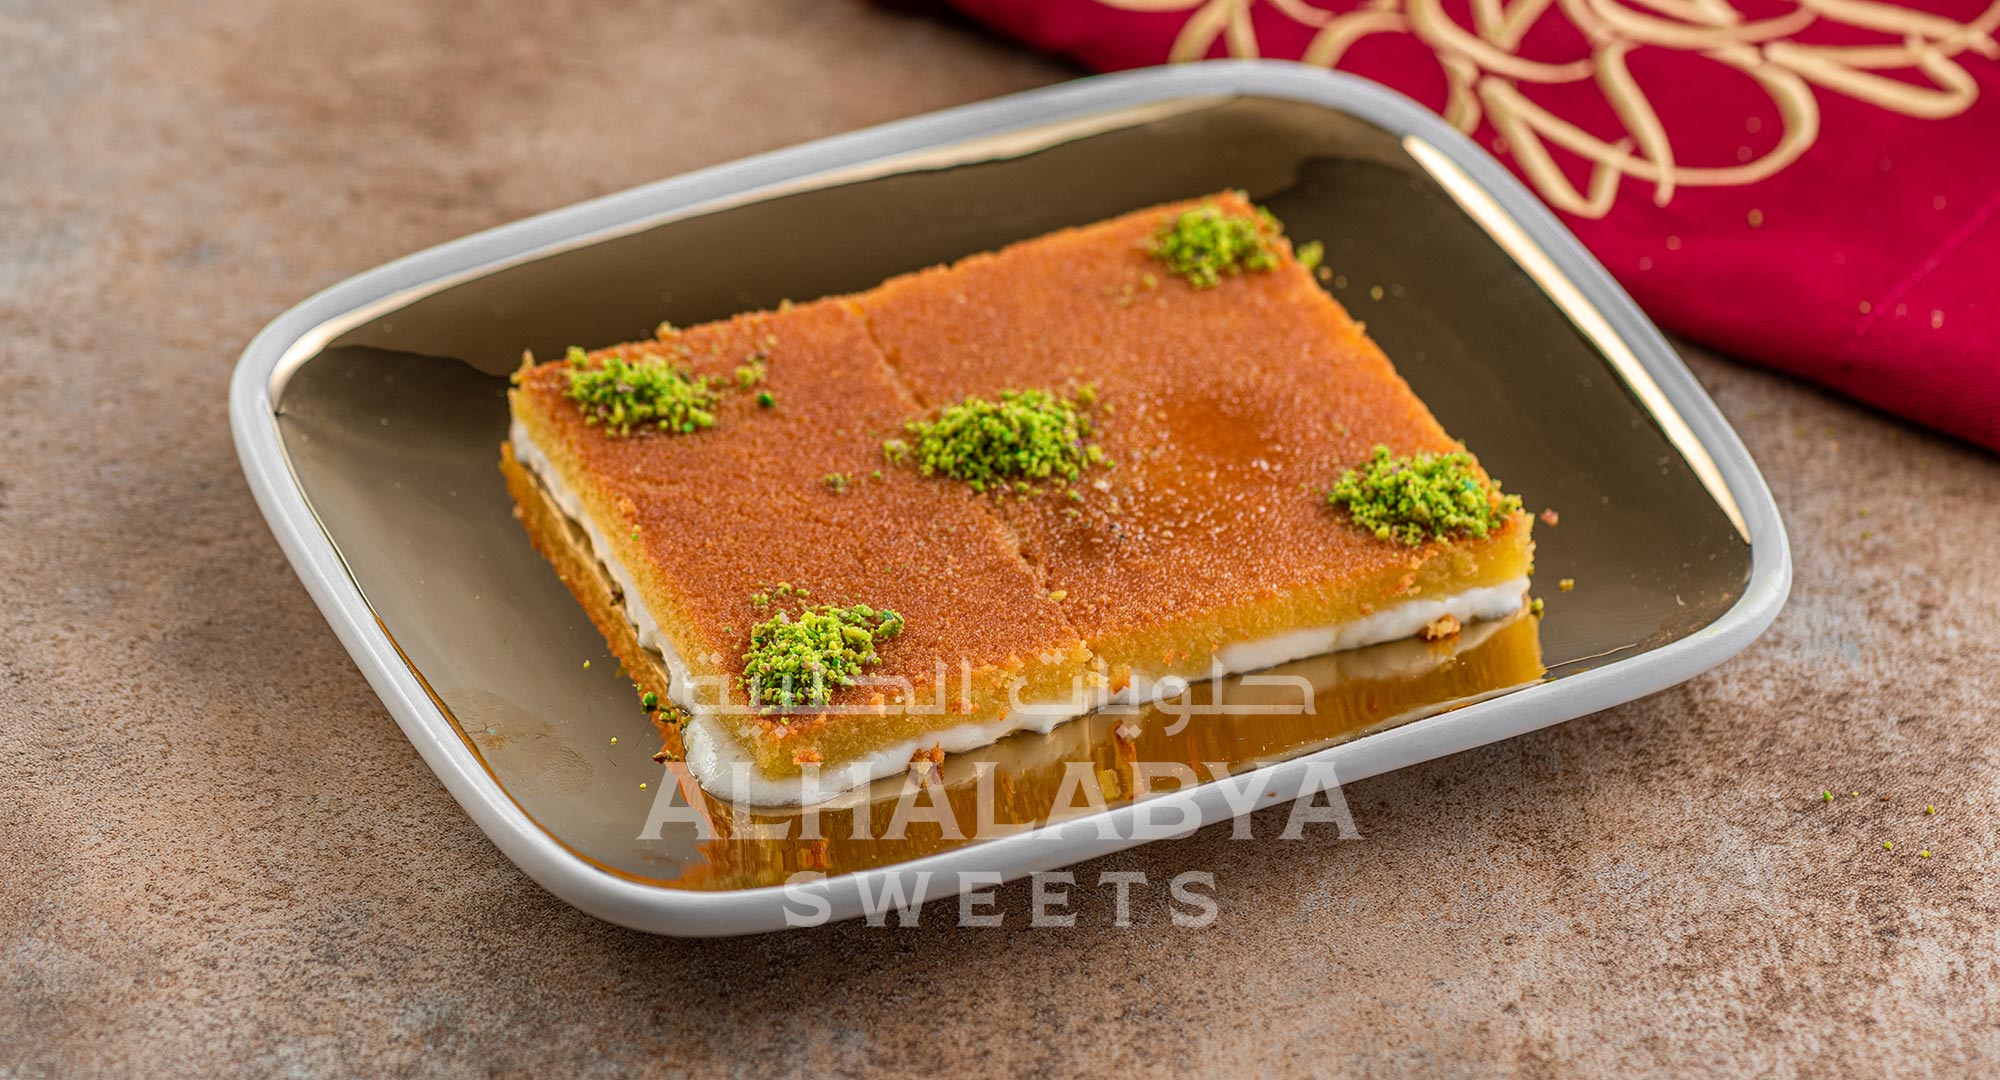 Why Al Halabya Sweets Has the Best Arabic Kunafa Sweets in the UAE